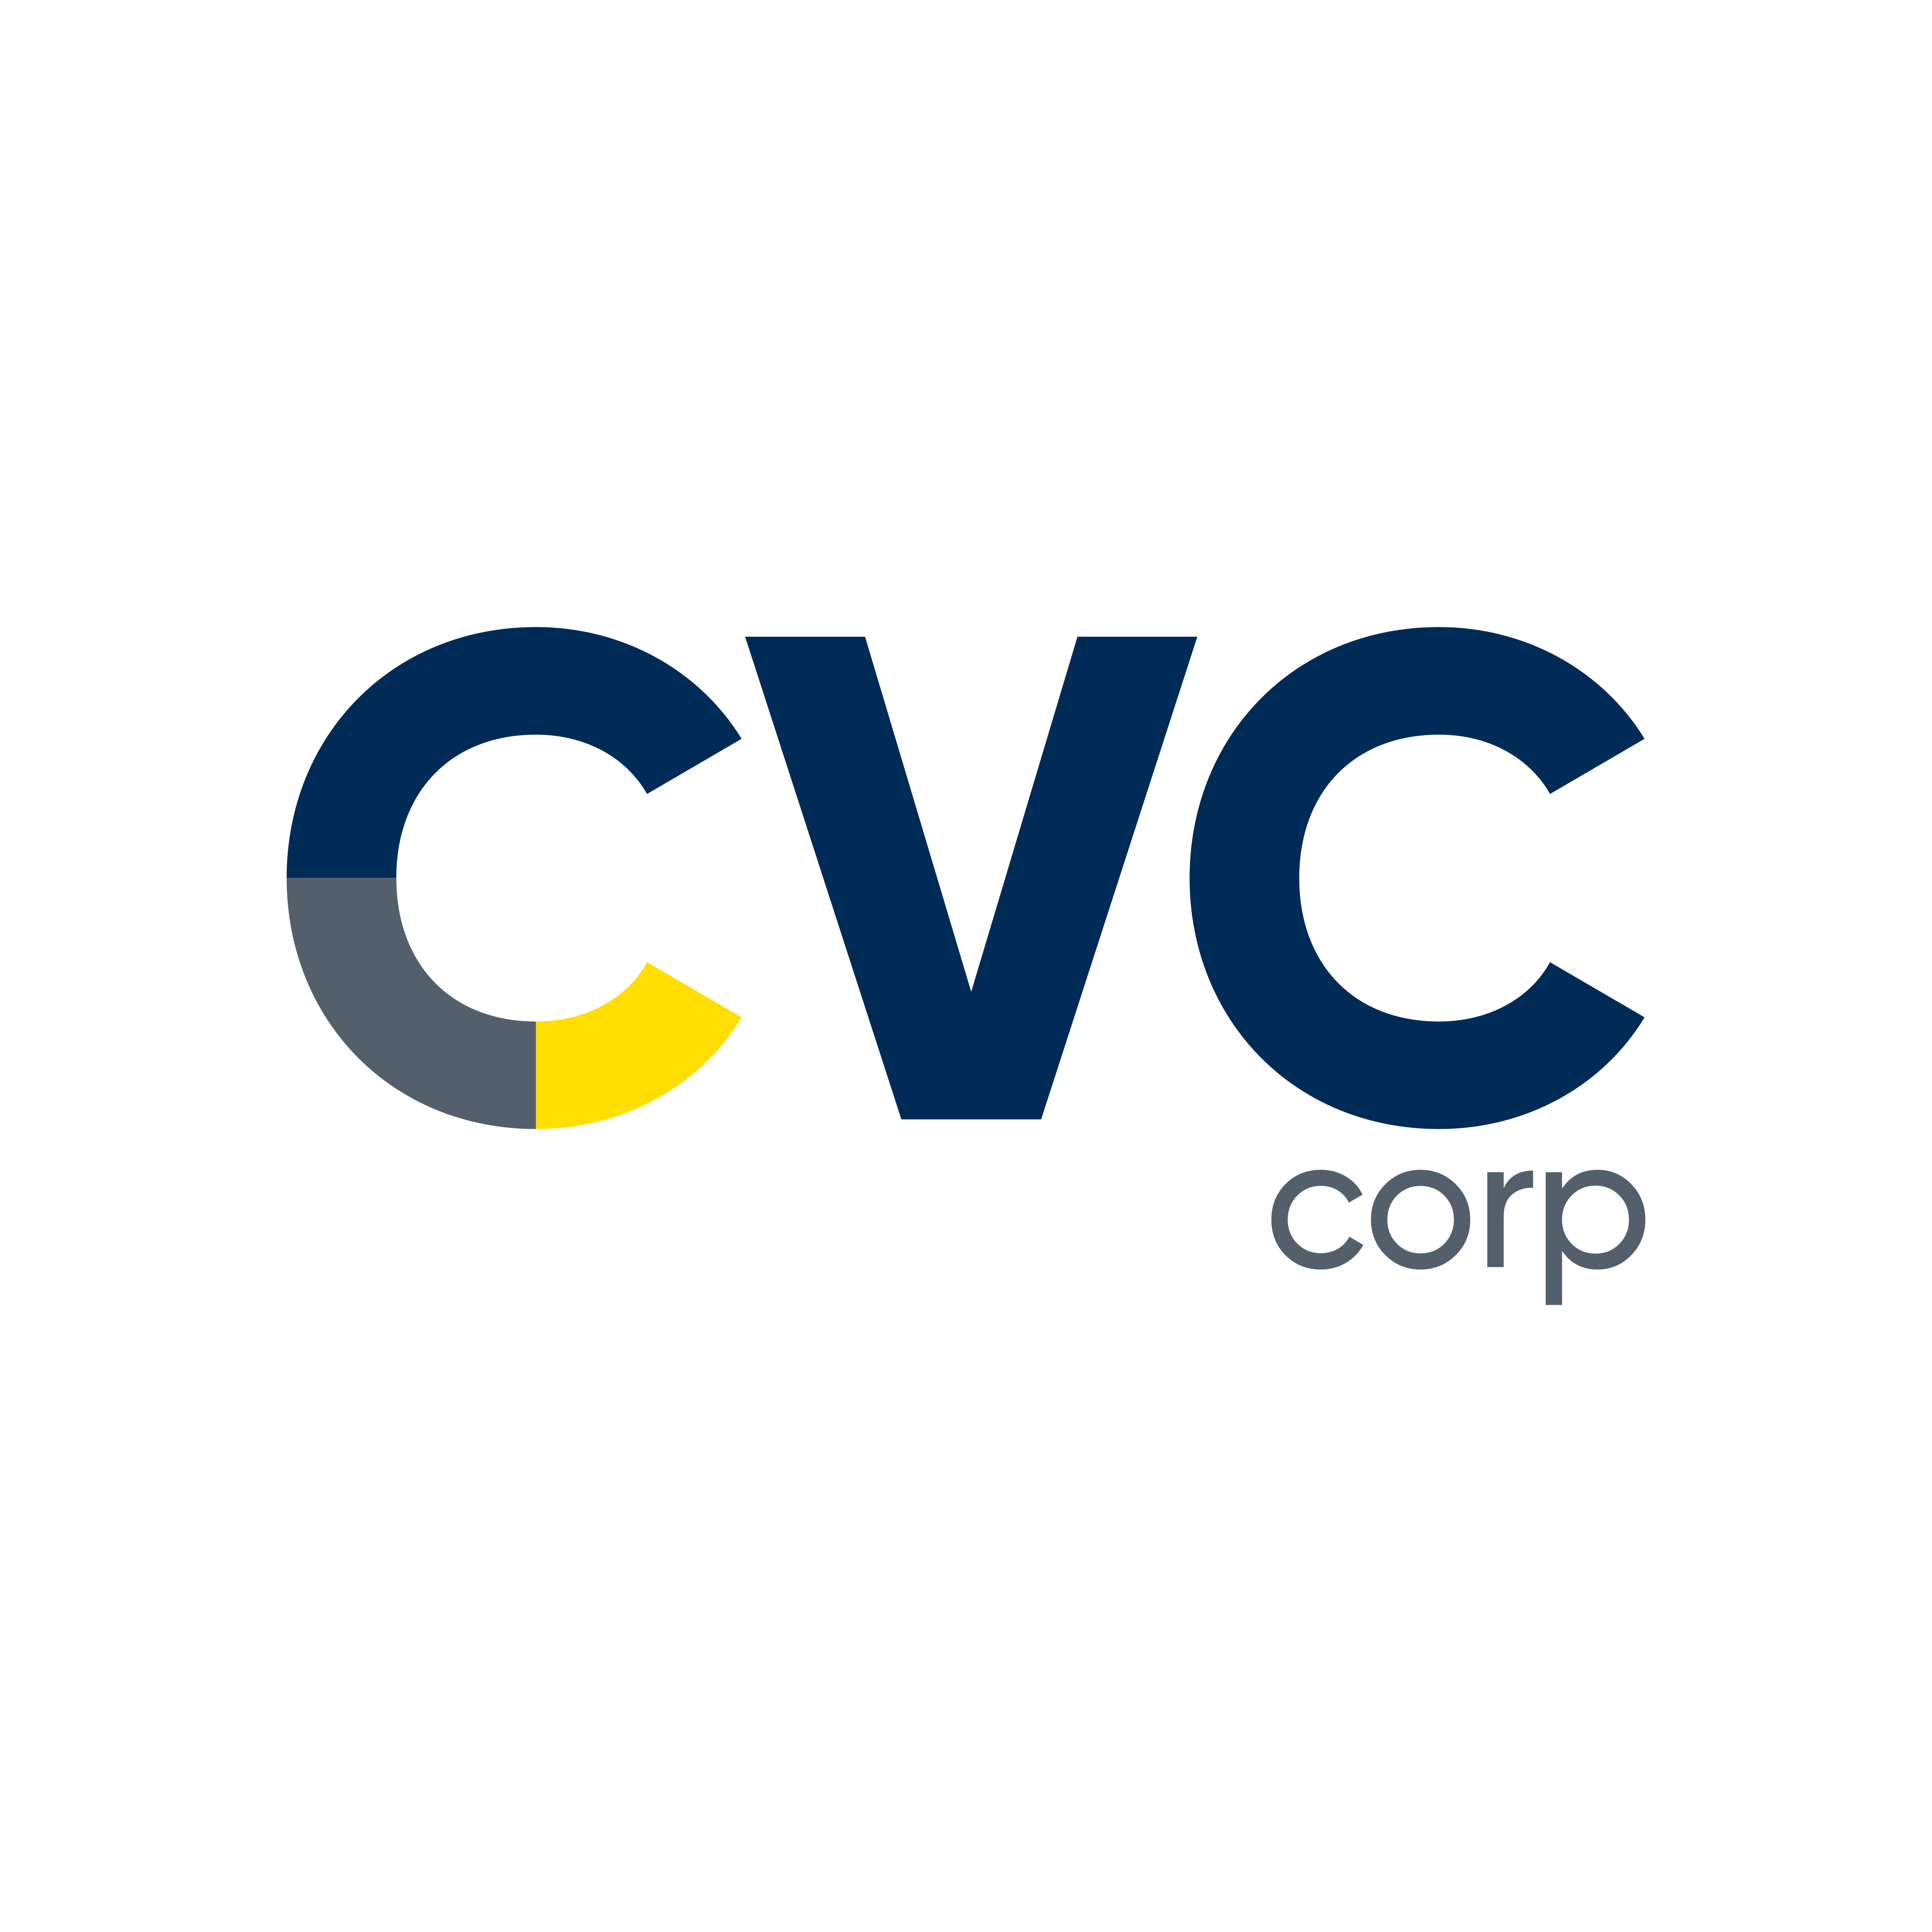 CVC Corp Logo PNG e Vetor Download de Logo